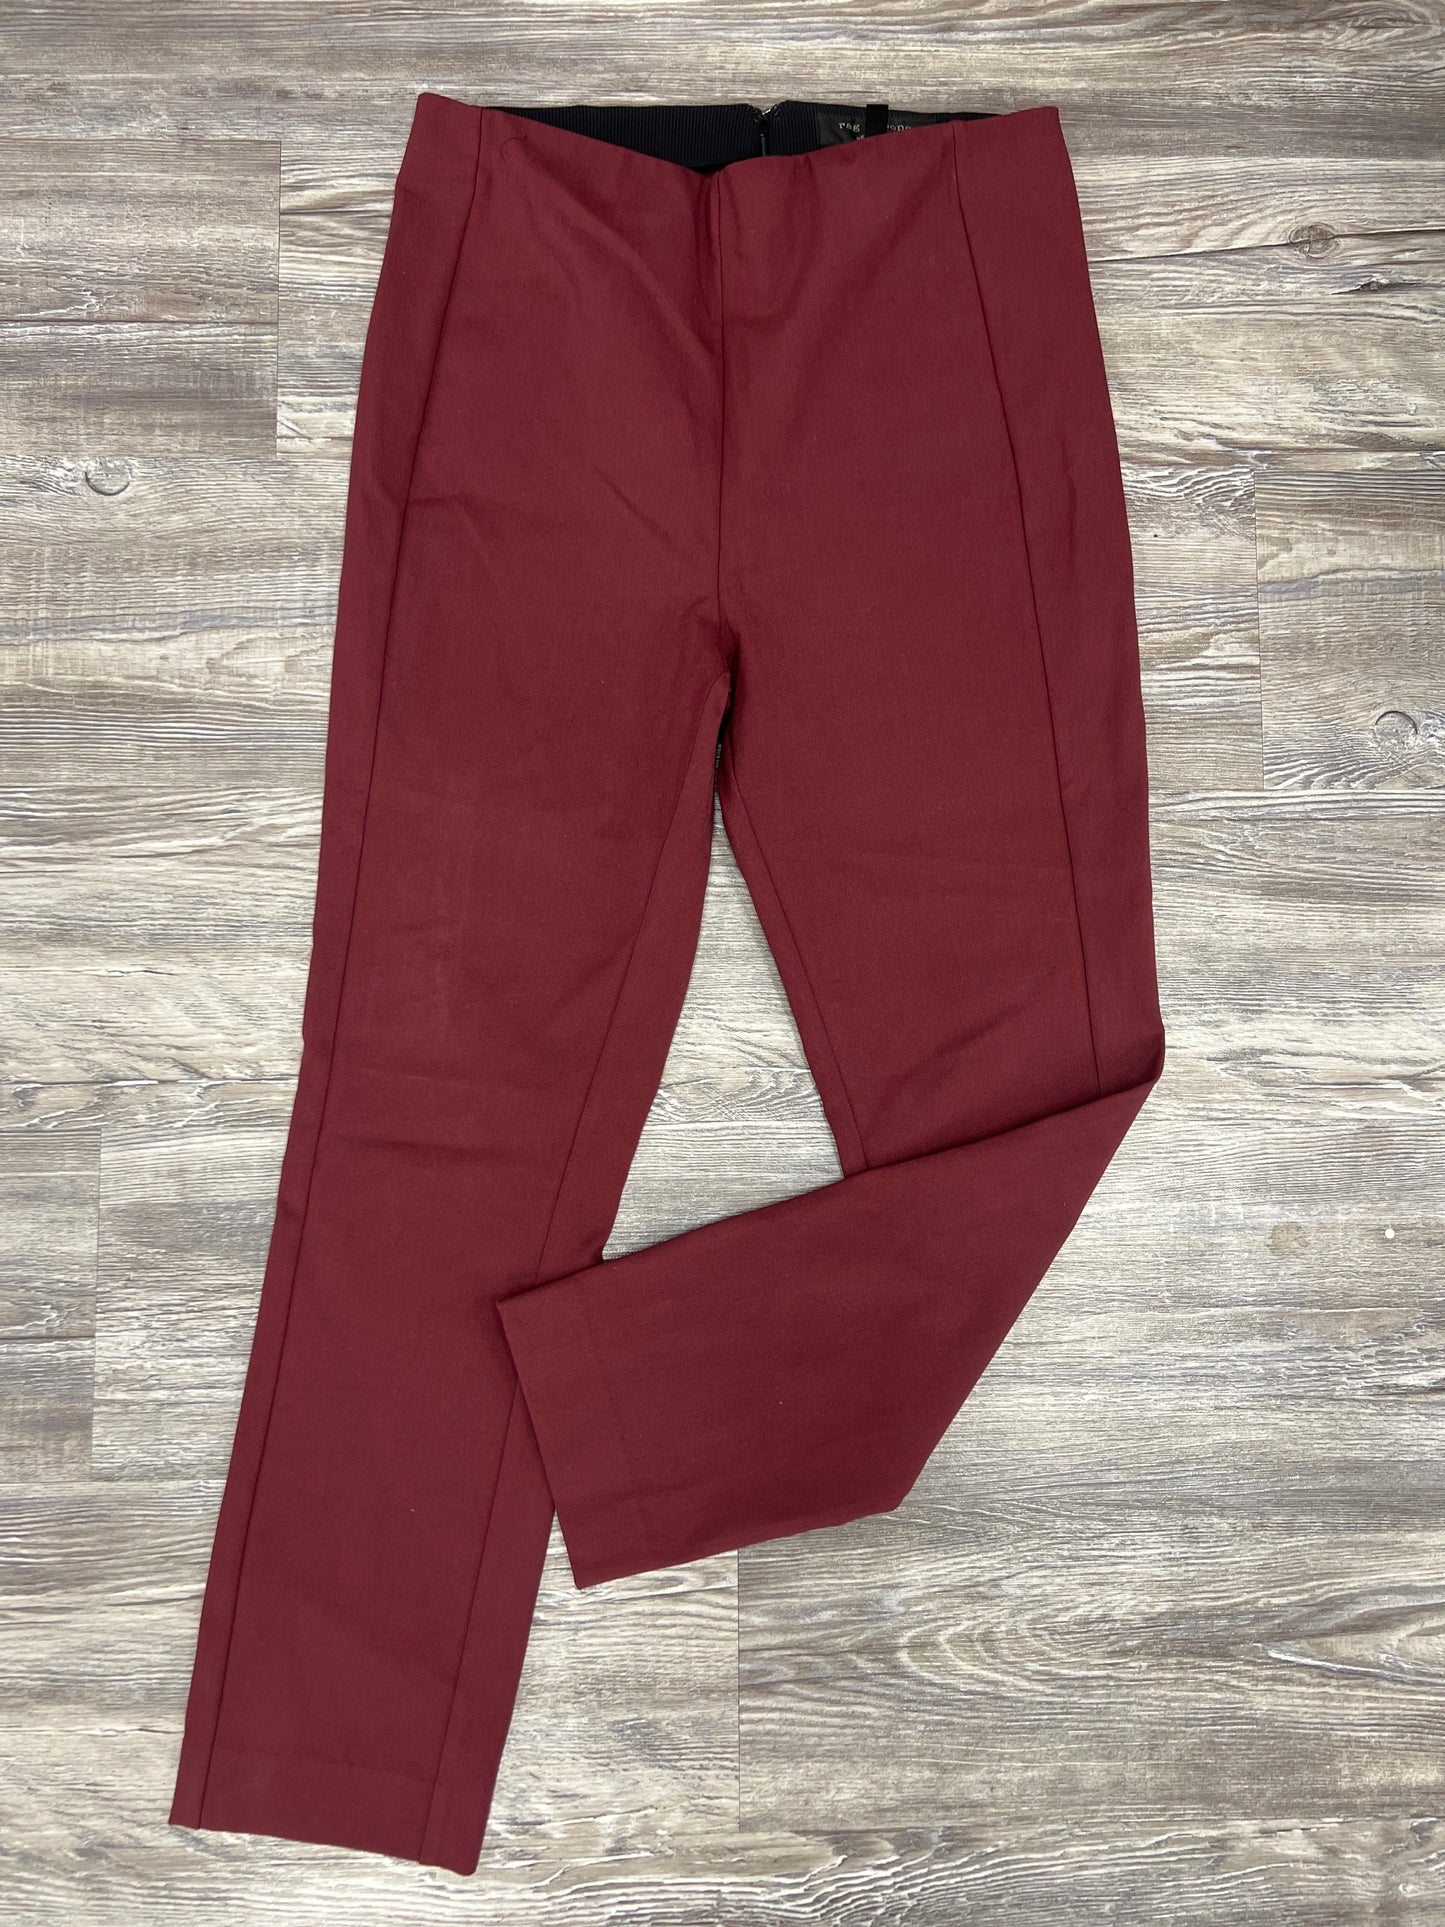 Red Pants Designer Rag And Bone, Size 8